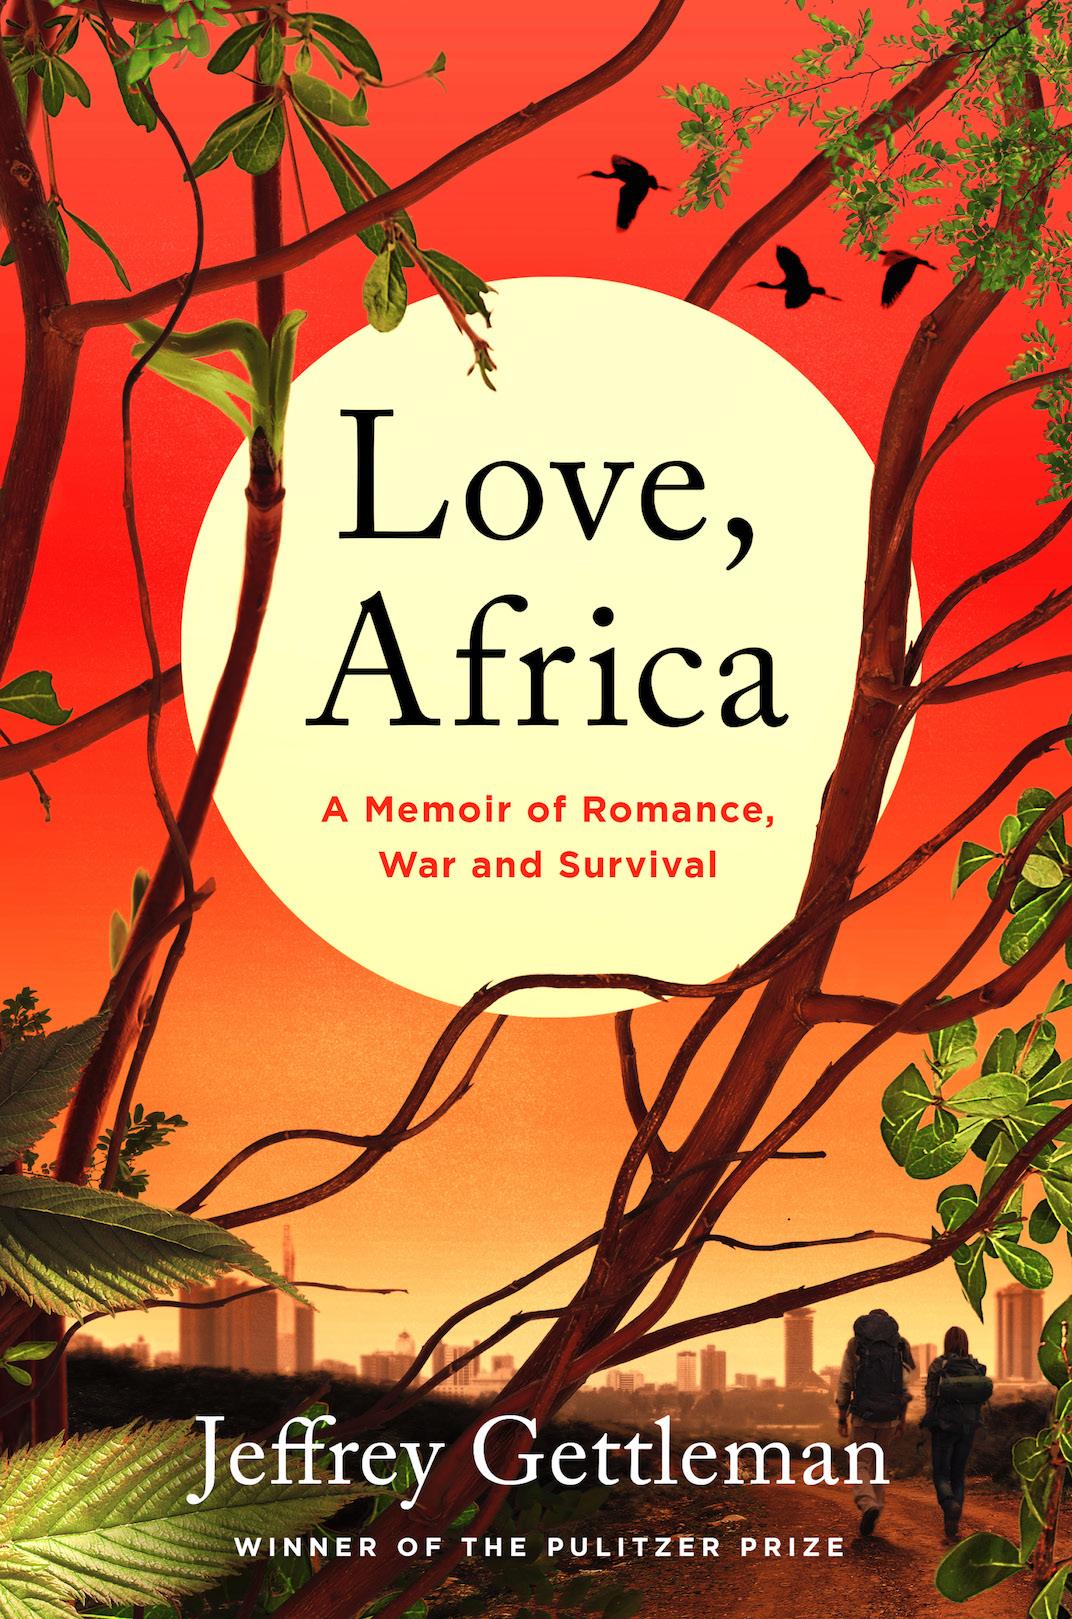 Love, Africa - new book by Jeffrey Gettleman